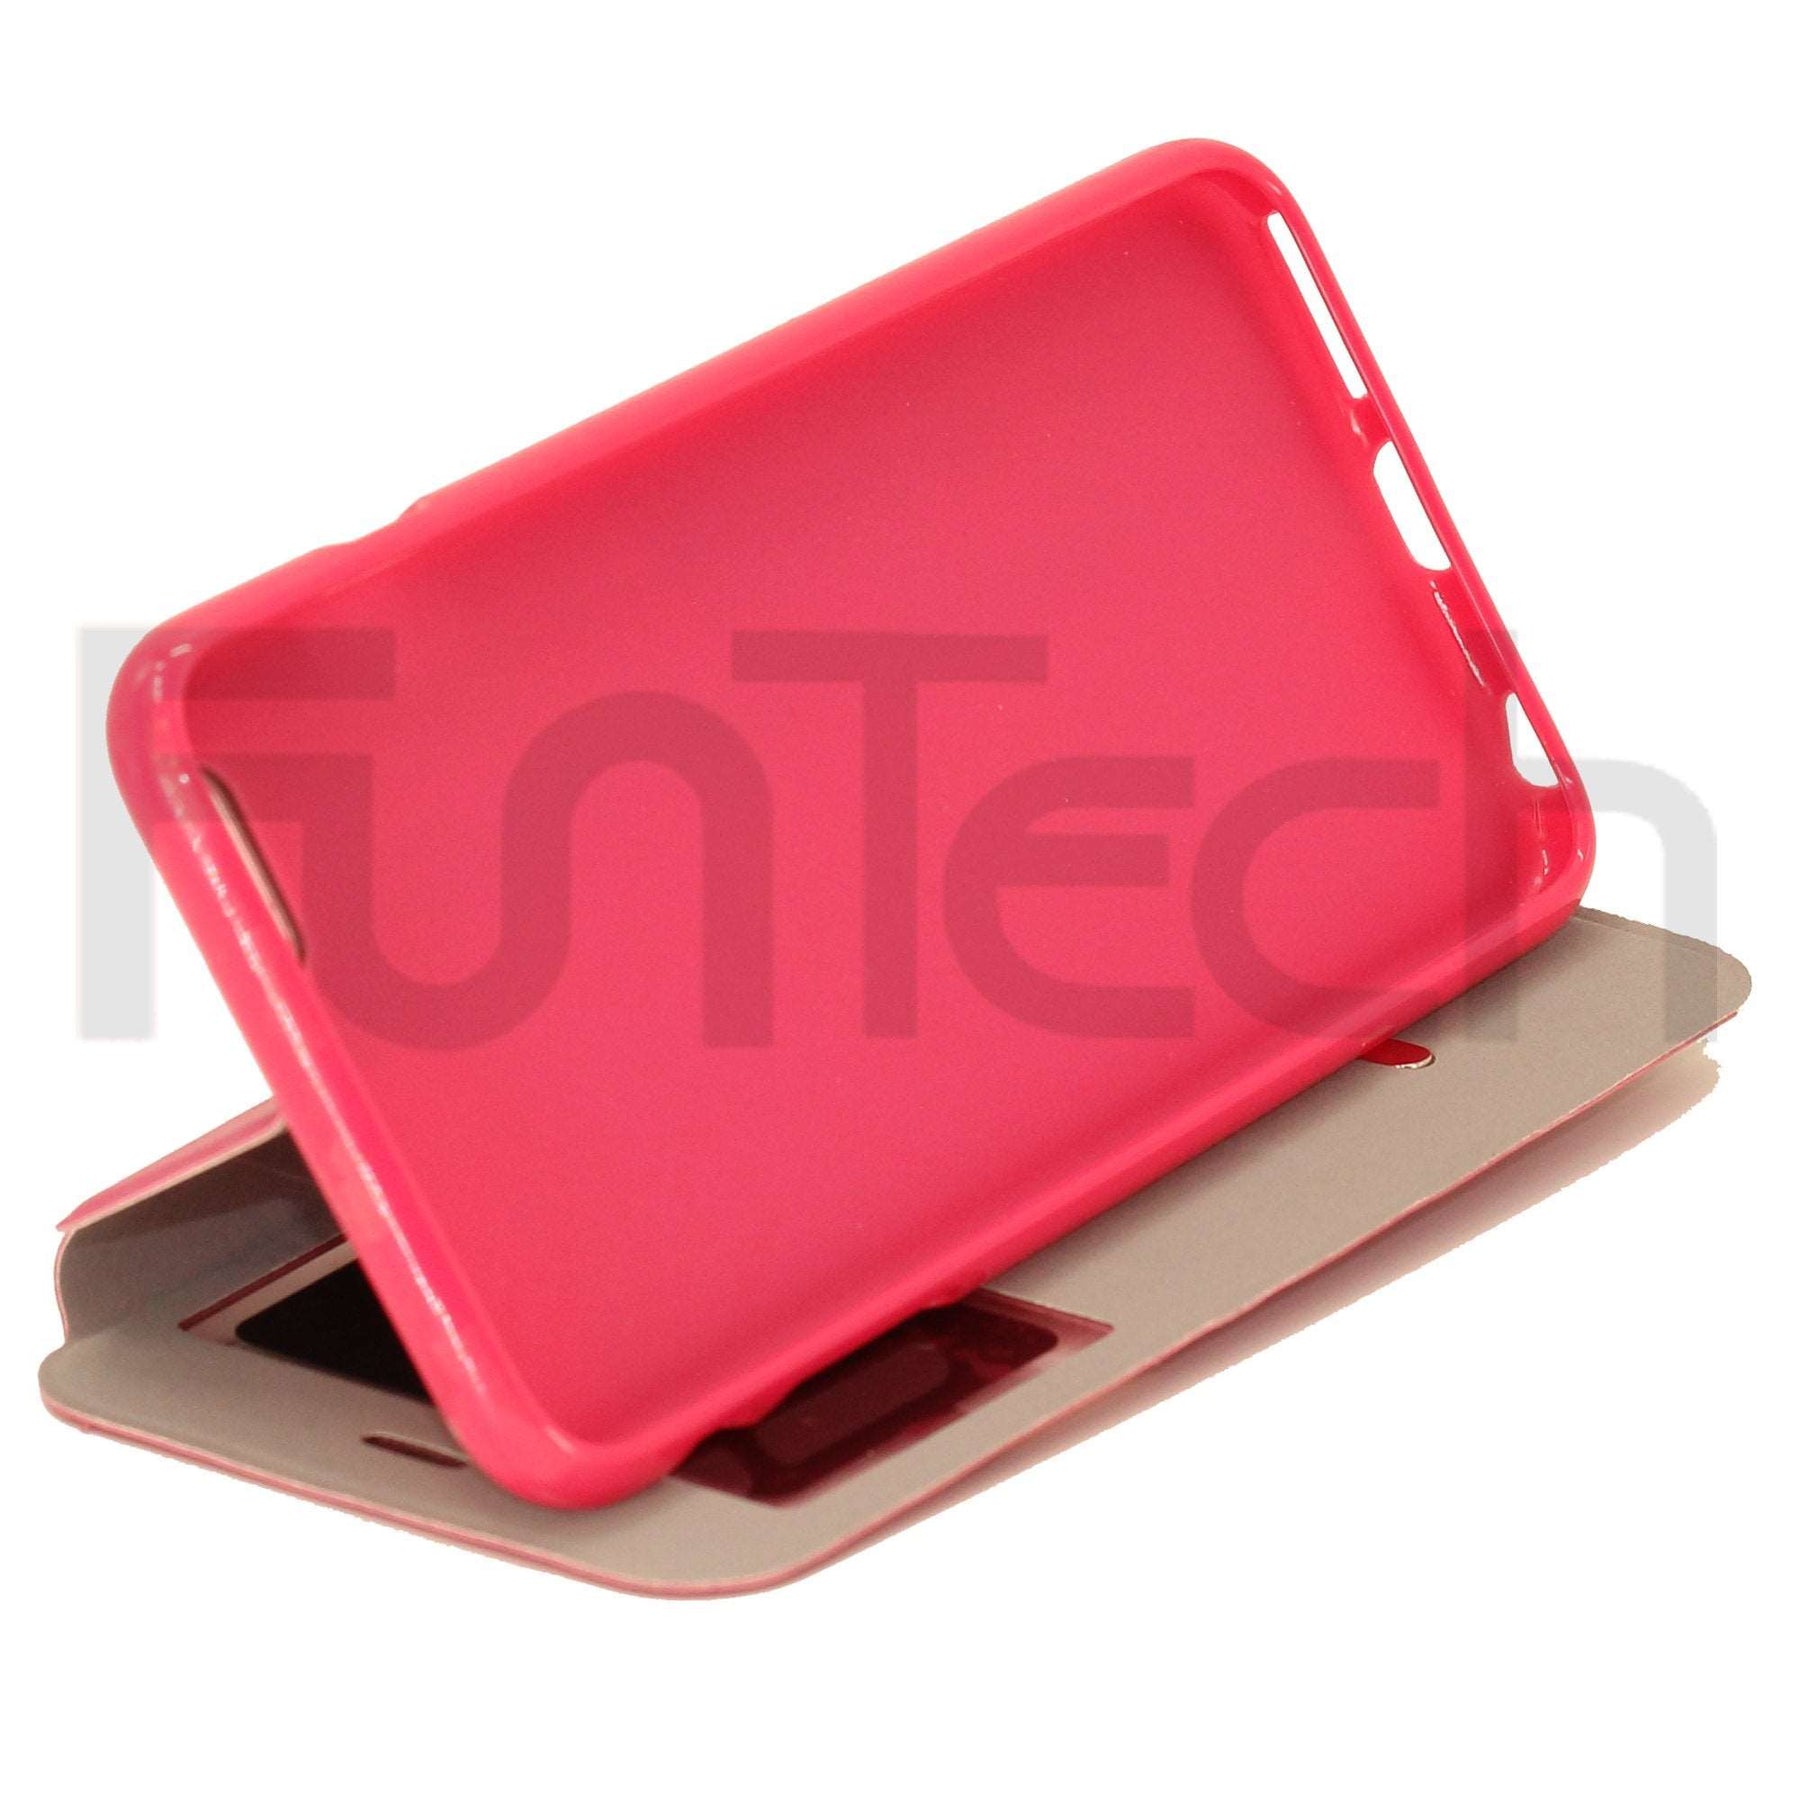 Apple iPhone 6 Plus Skylight Leather Case Pink